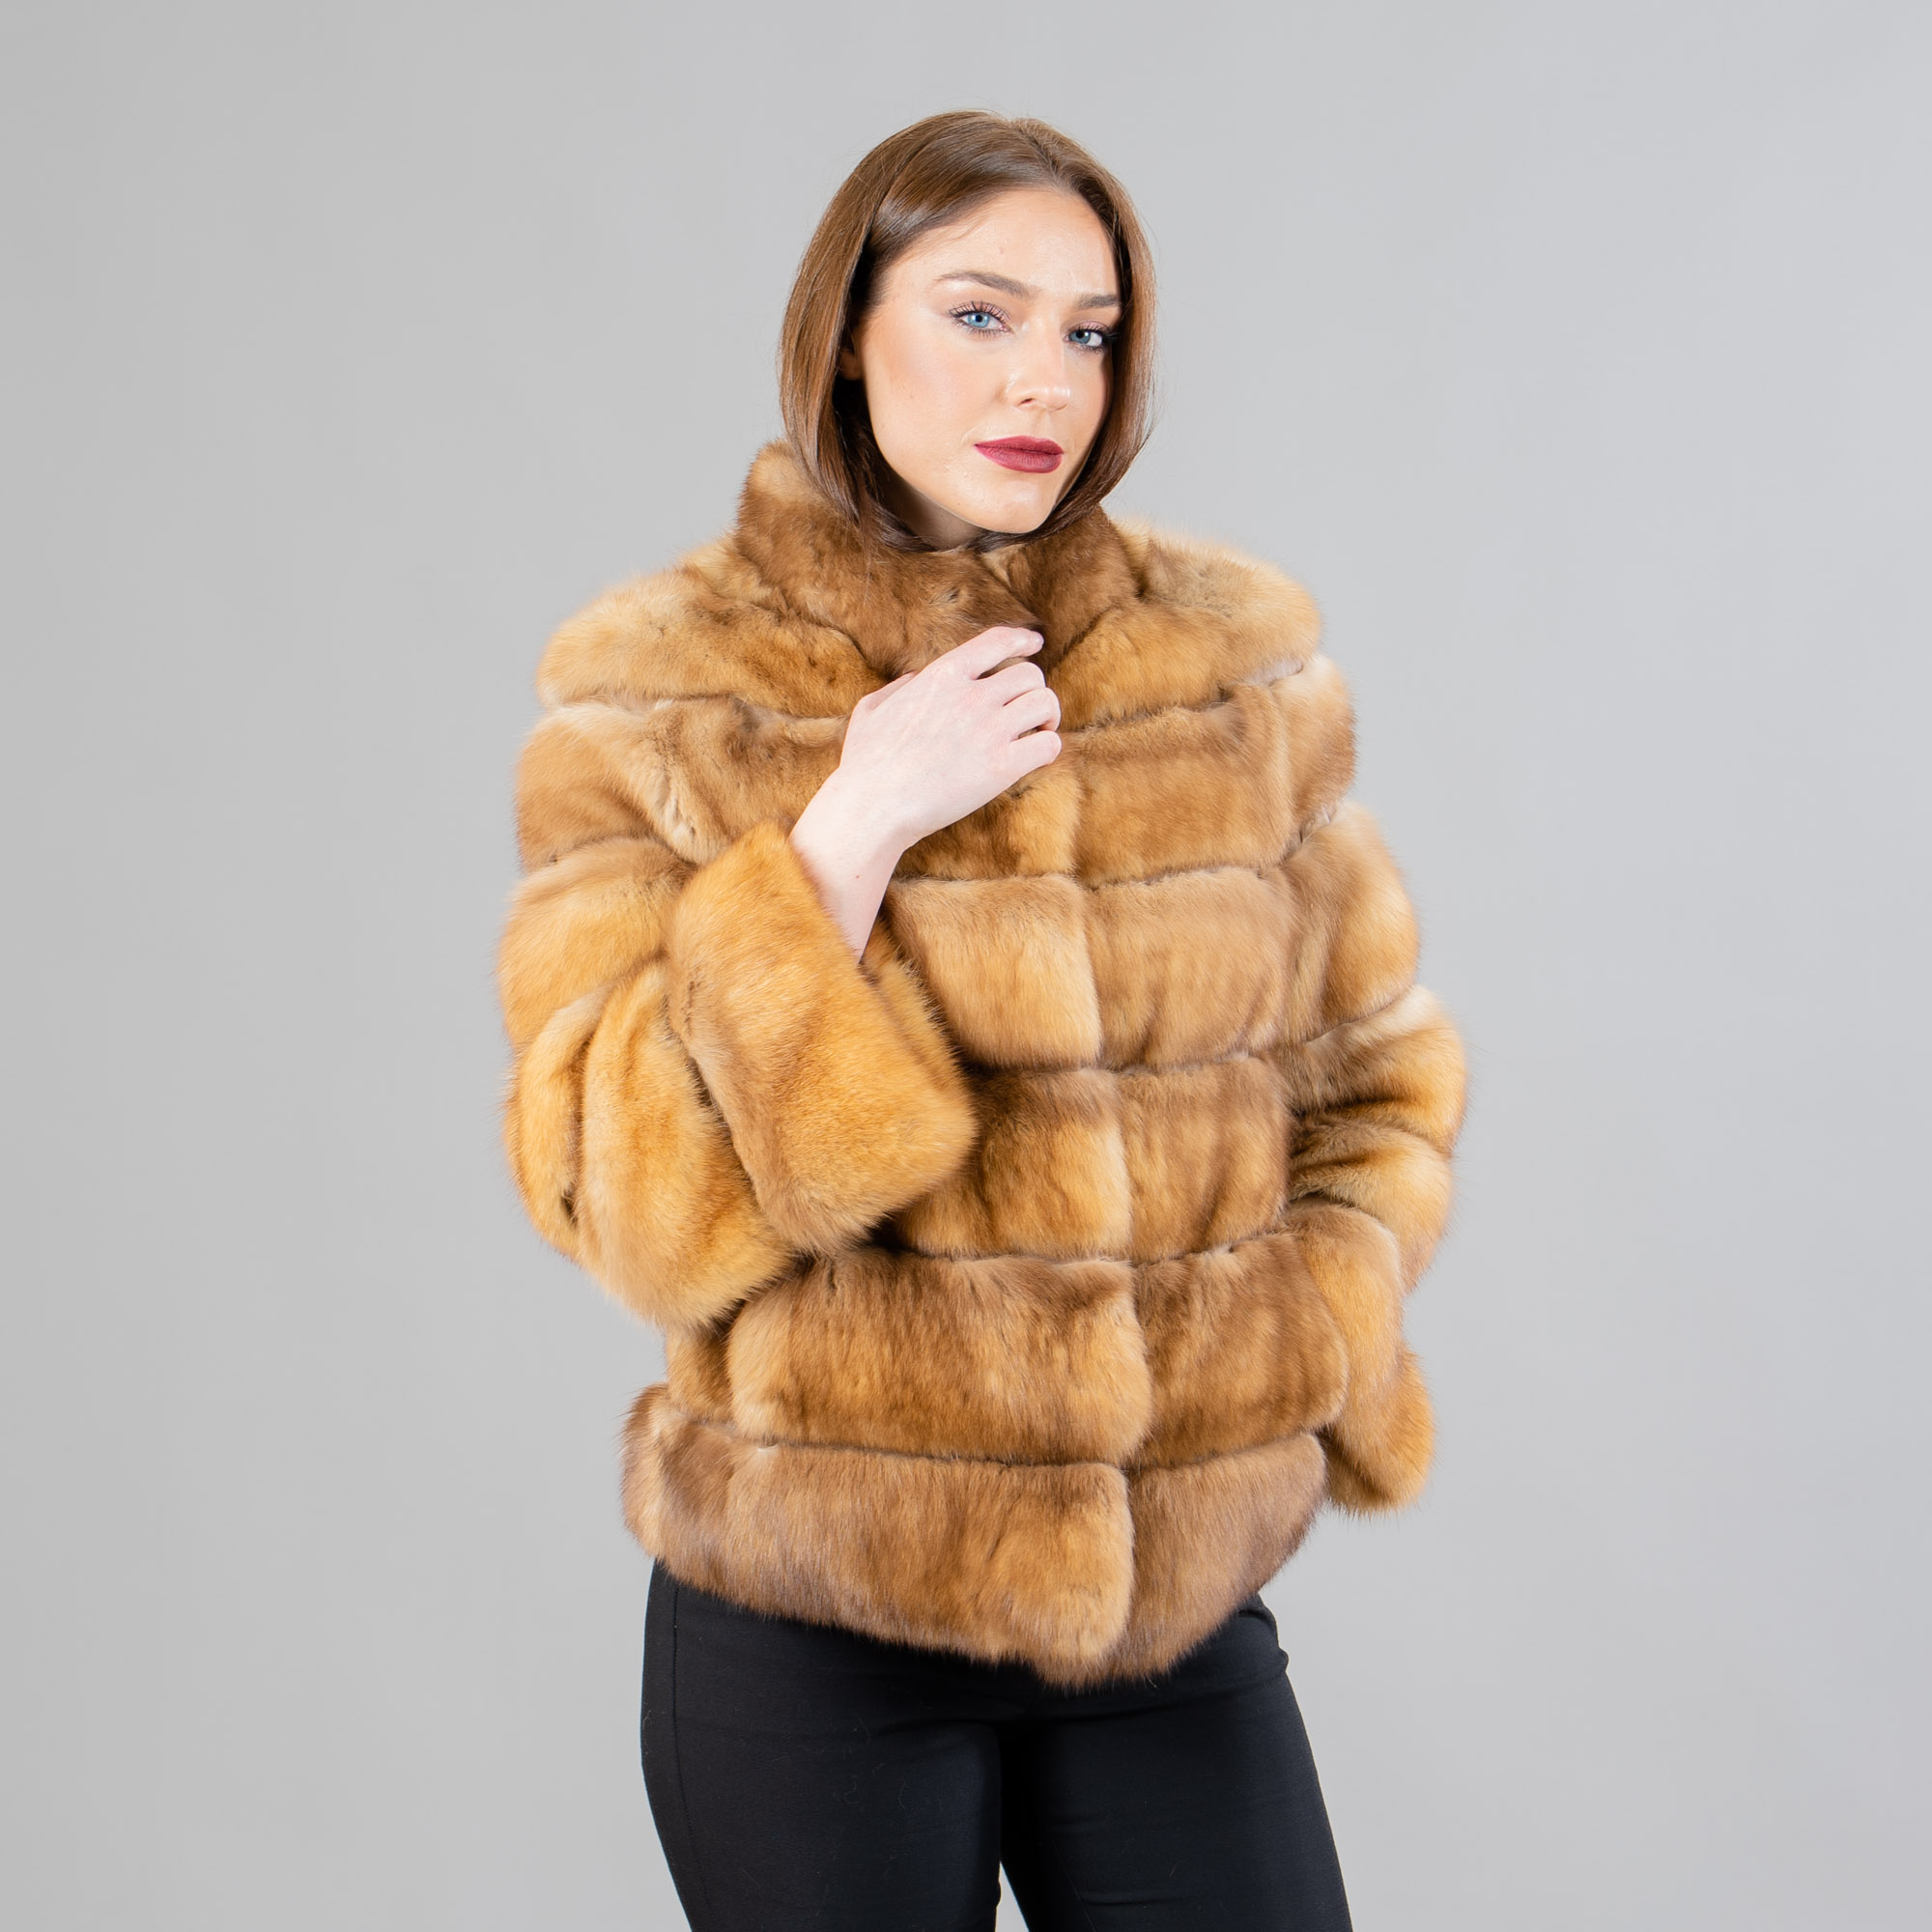 Sable fur jacket in gold color